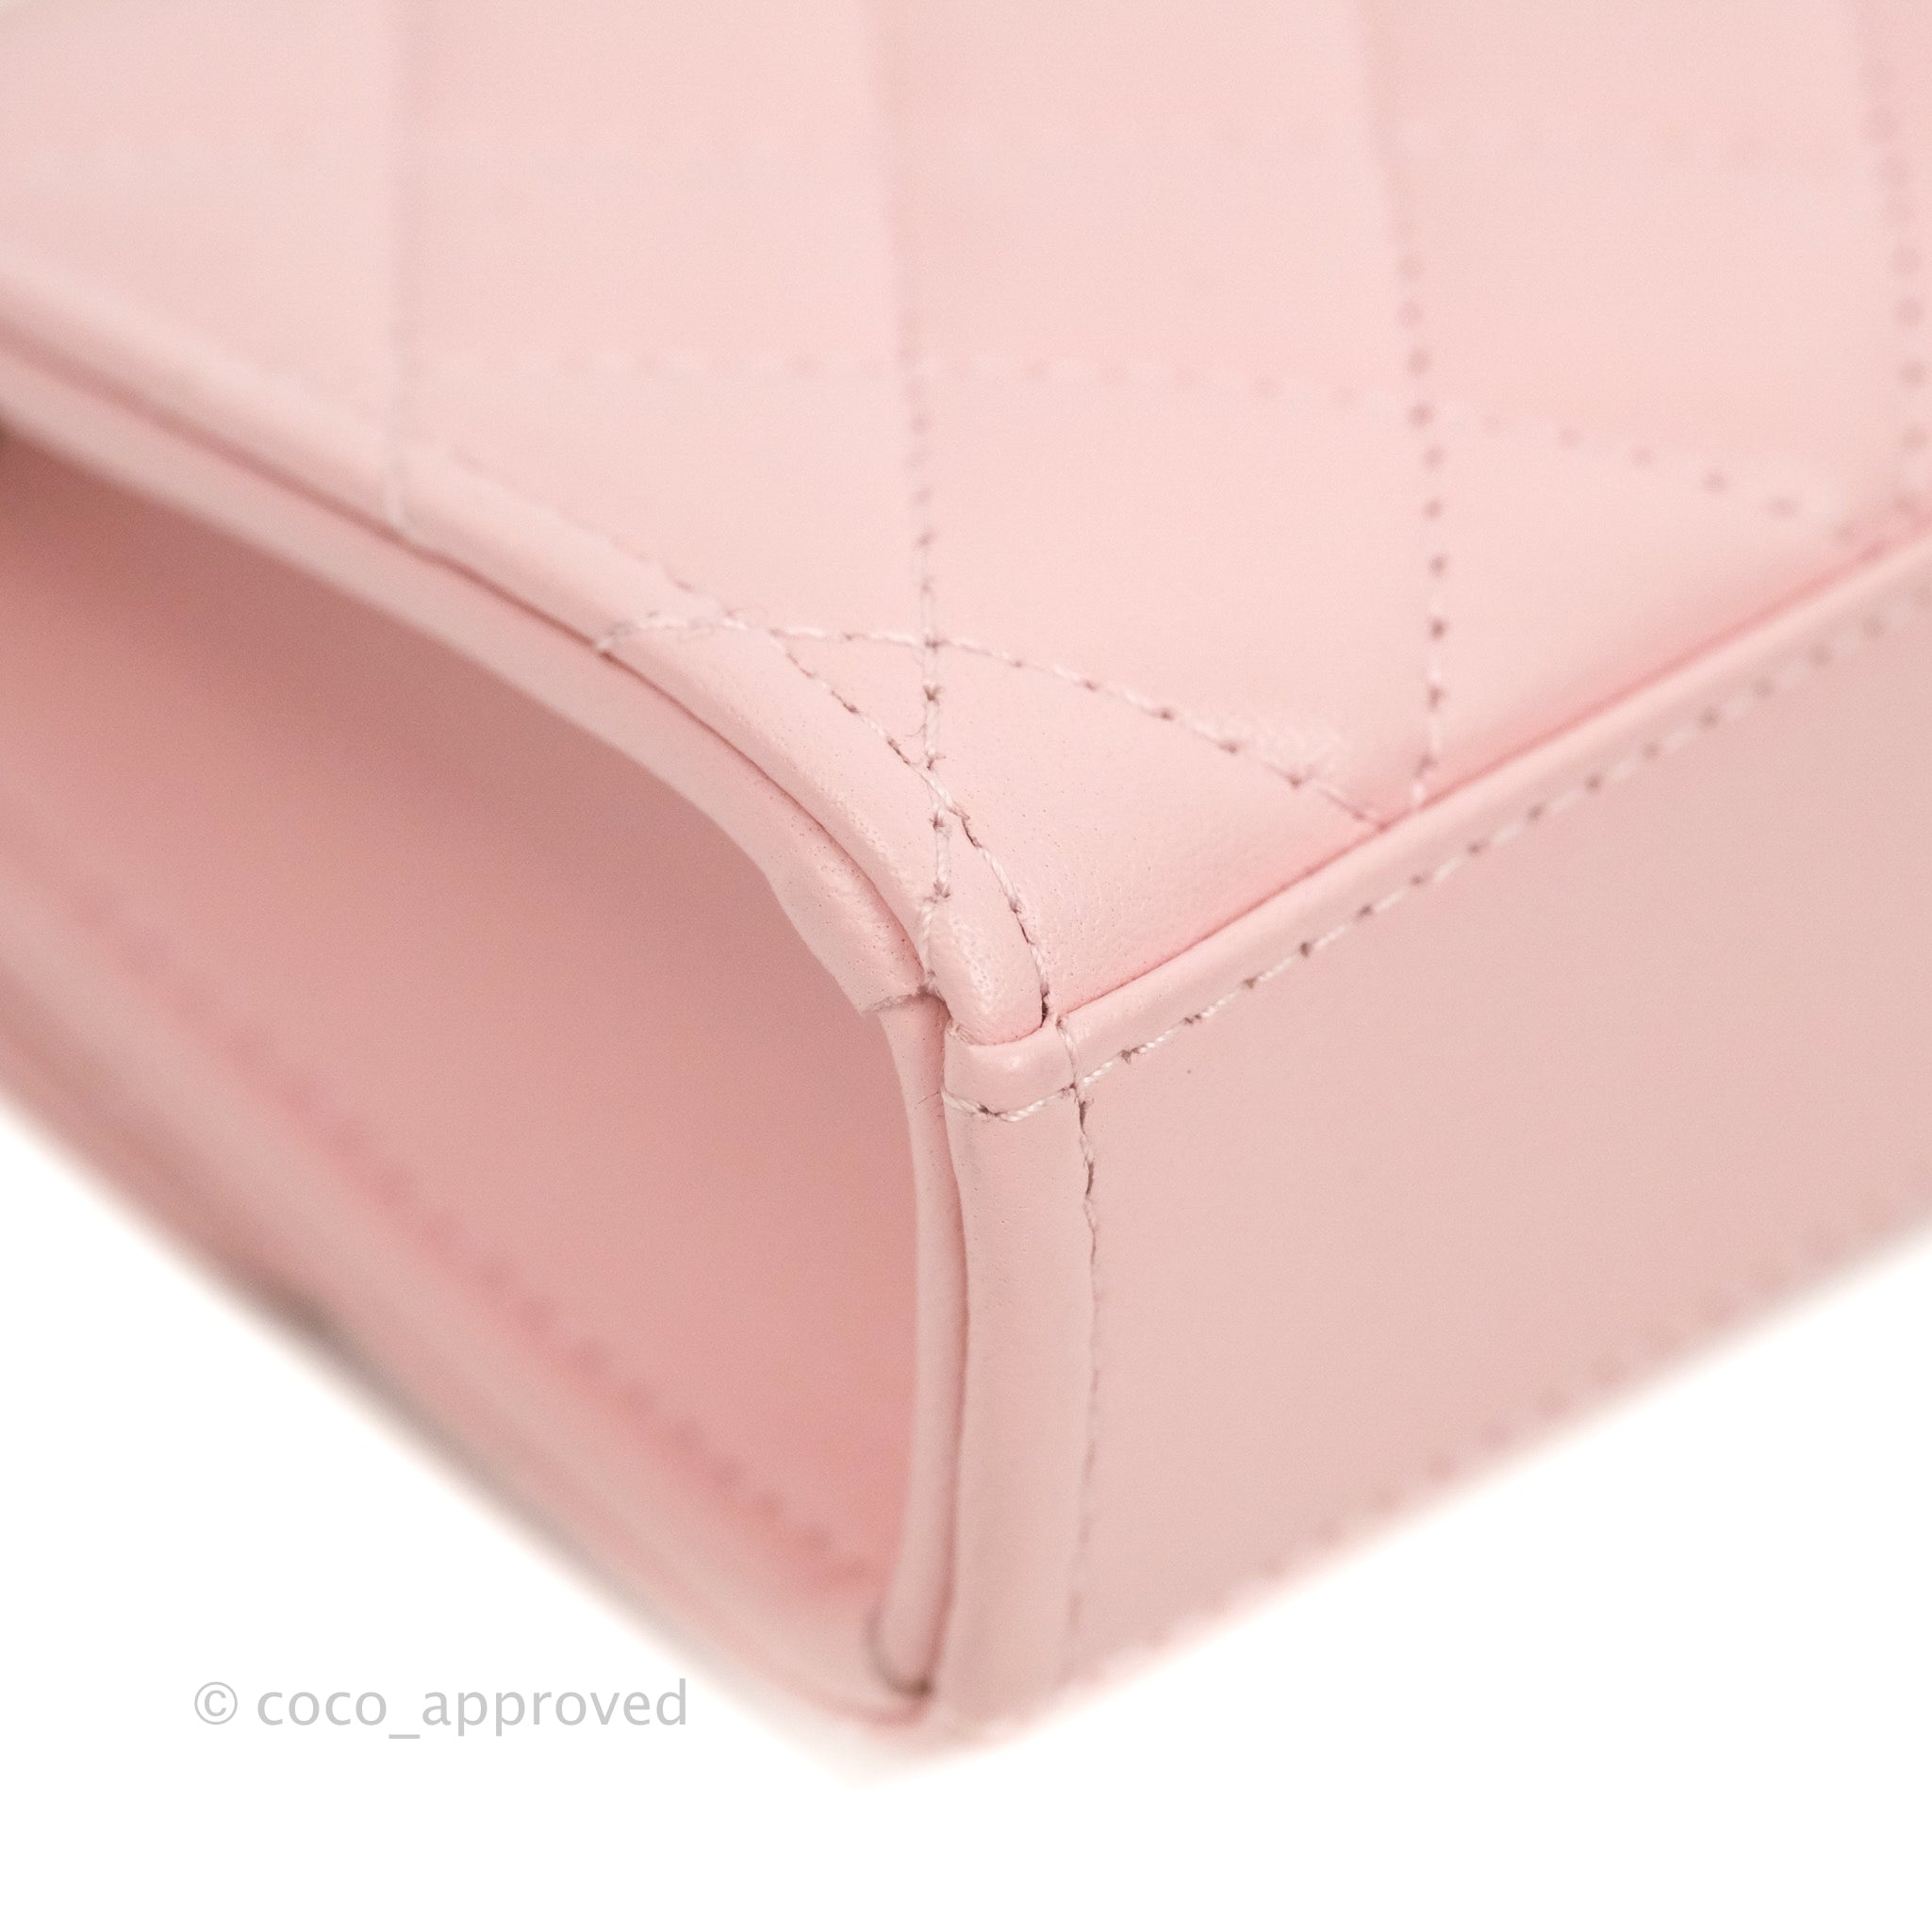 chanel small bag pink